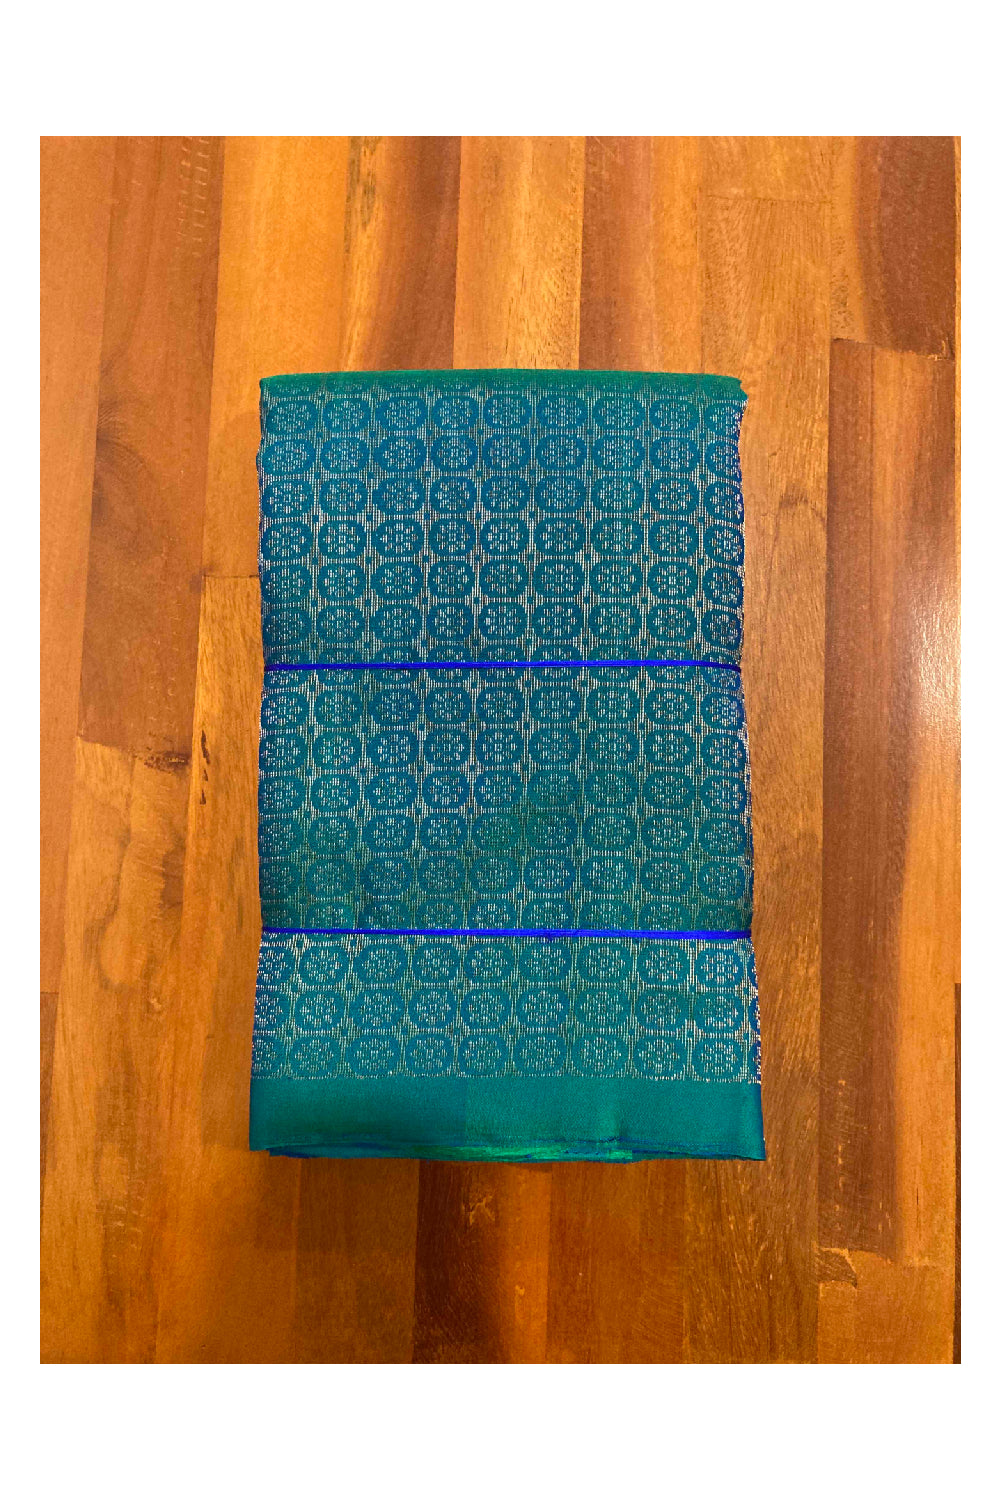 Southloom Handloom Pure Silk Manthrakodi Kanchipuram Saree in Single Teal Blue Colour and Silver Zari Motifs